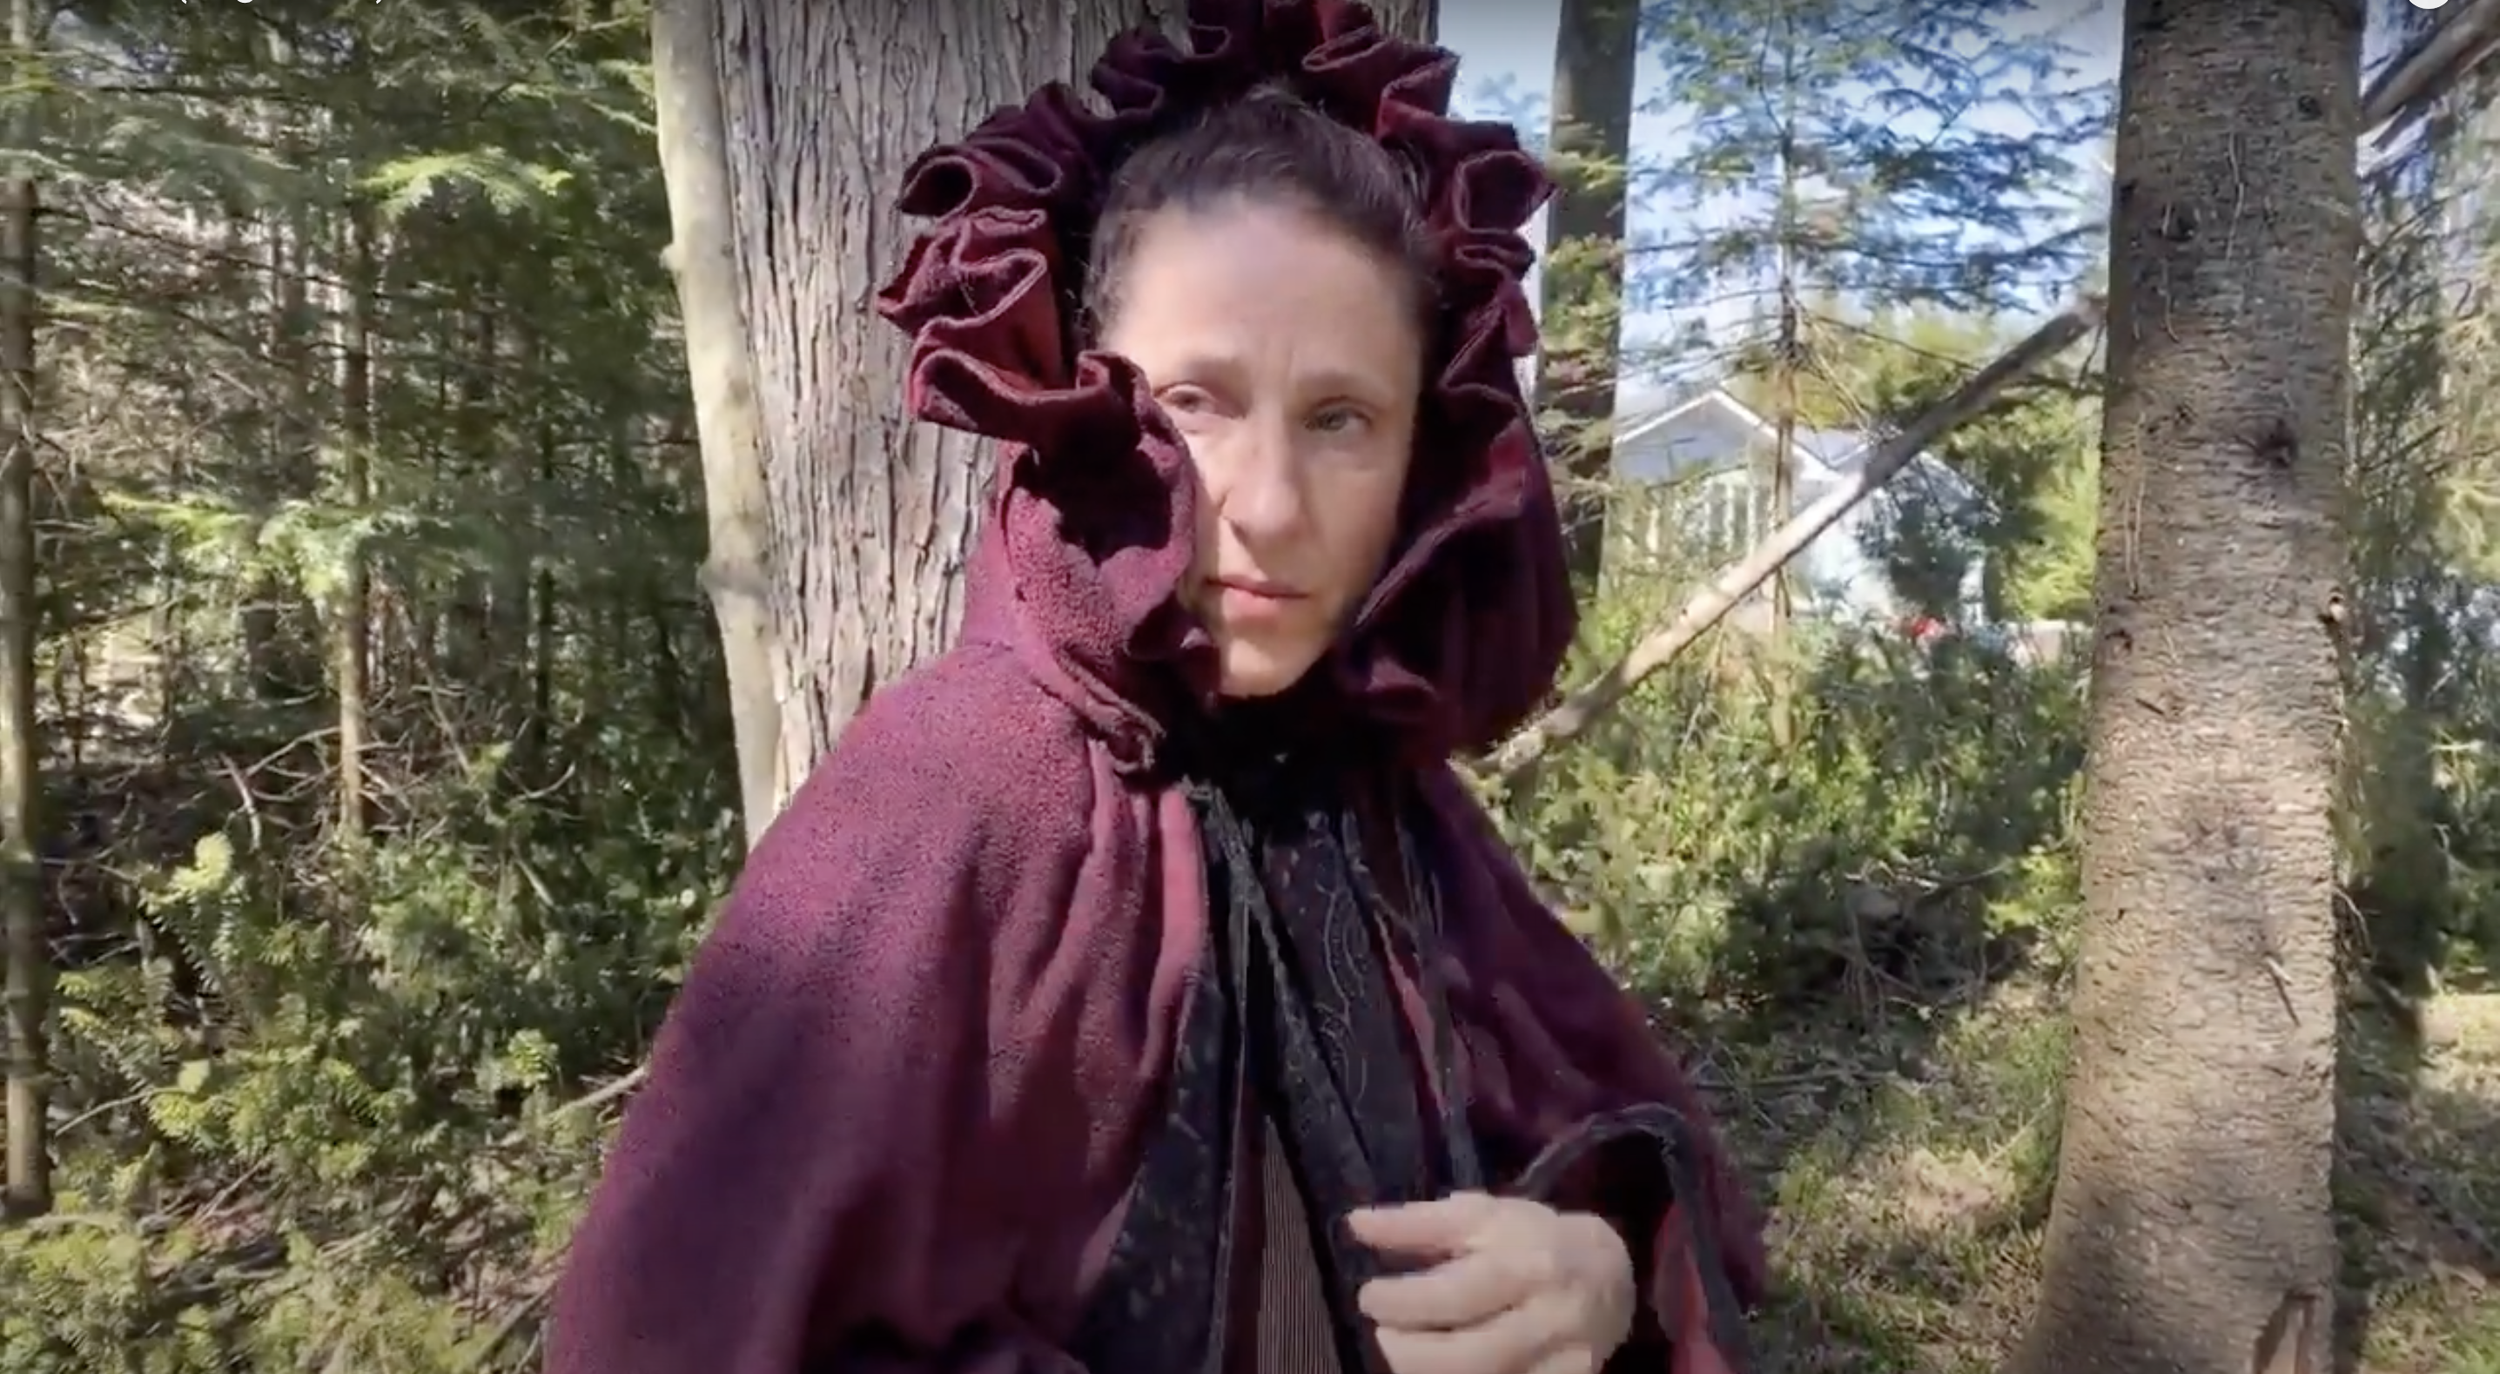 Portrait of a woman in a dark red cloak in the woods